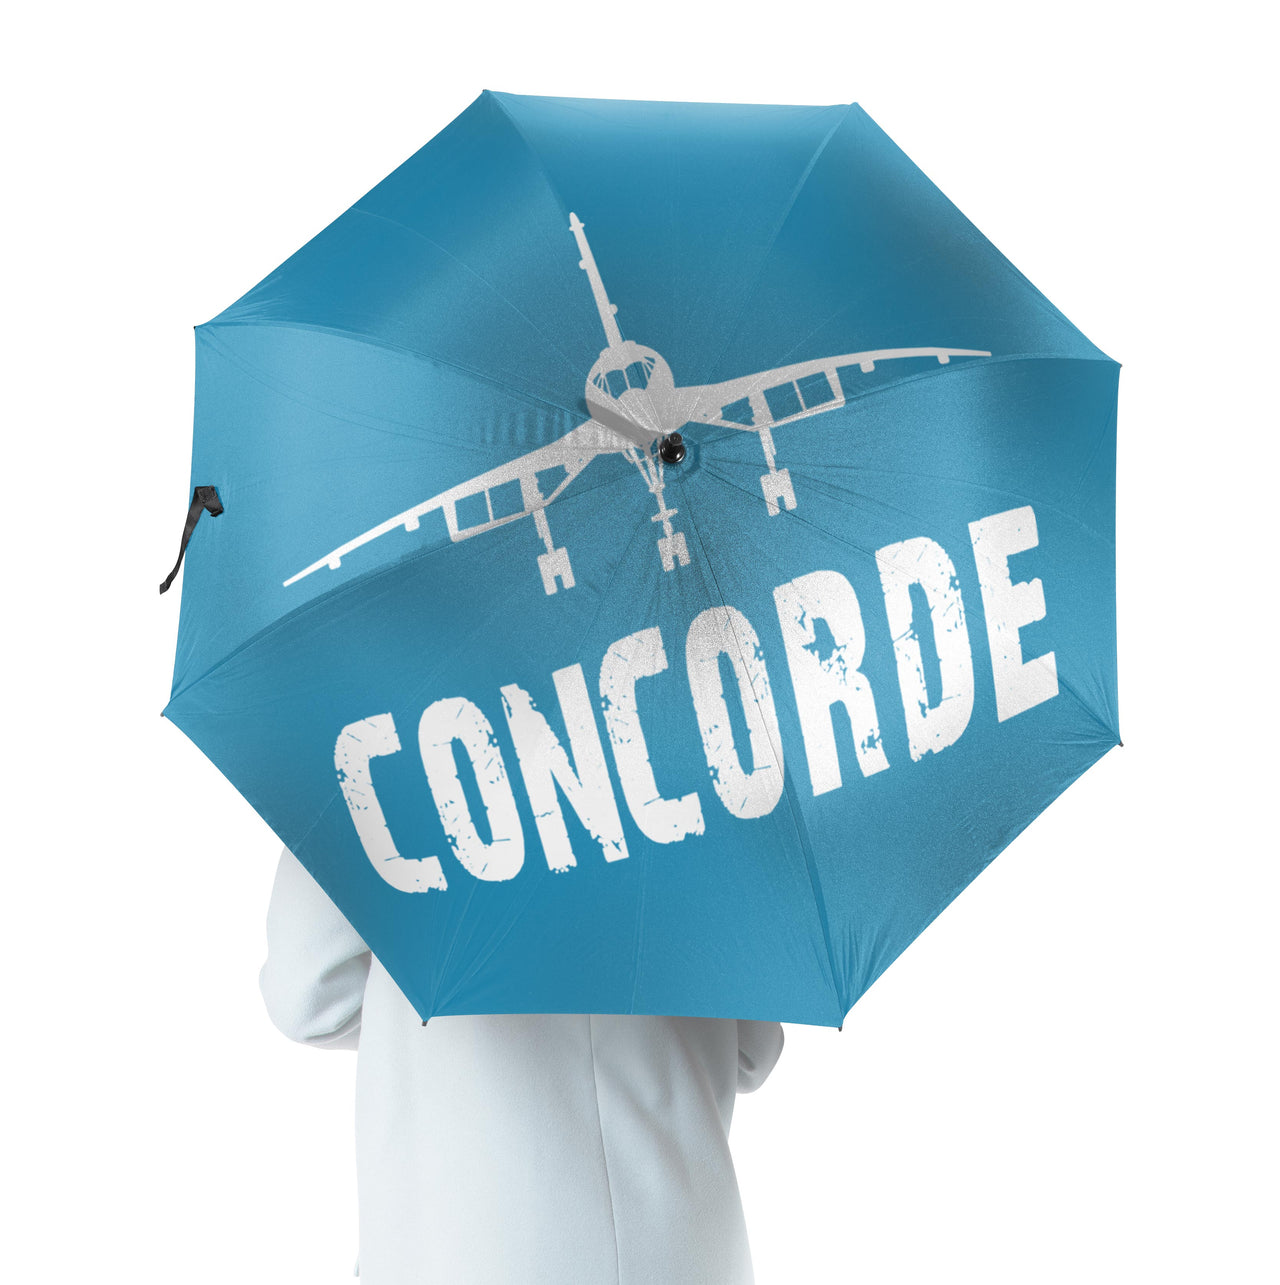 Concorde & Plane Designed Umbrella